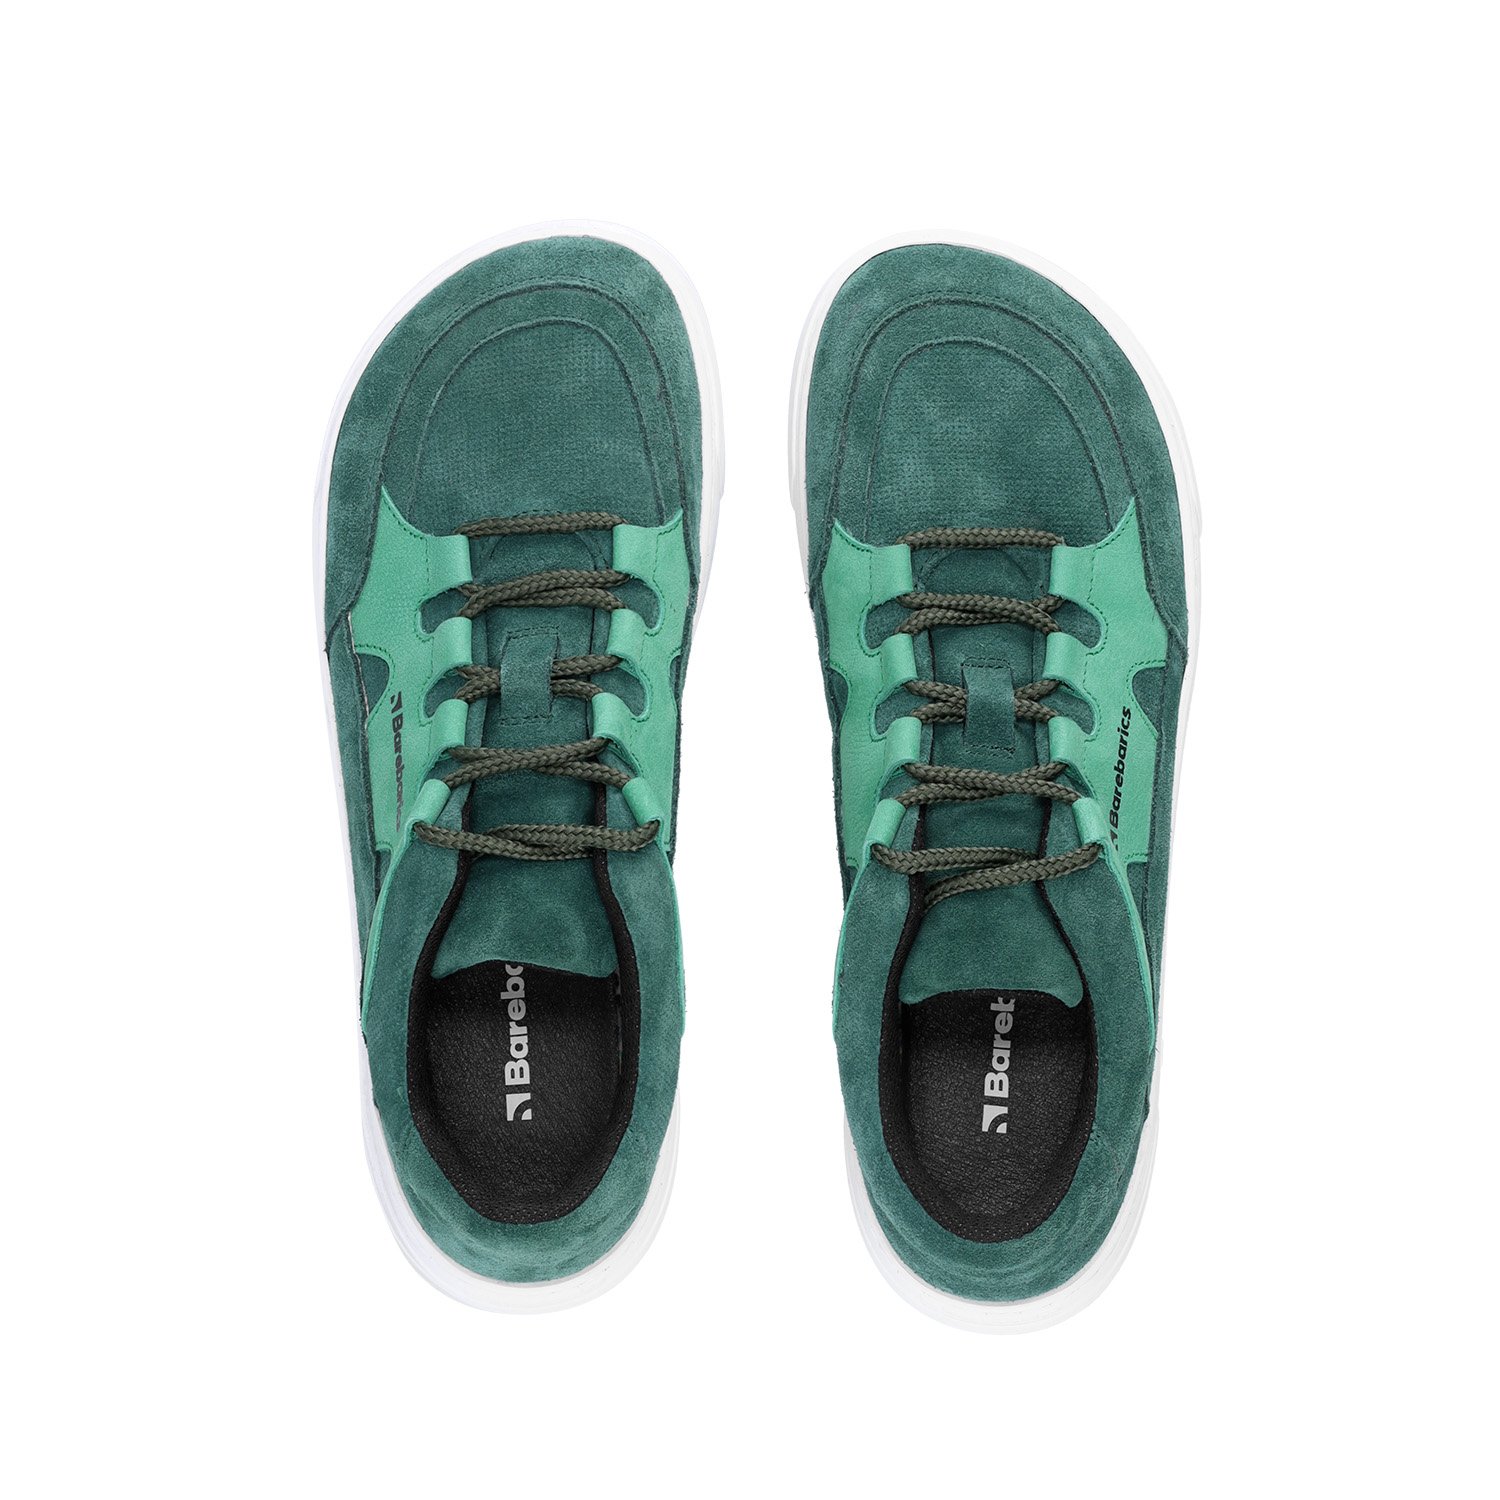 Women's Slip On Shoes Sneakers Artificial PU Upper & Rubber Sole Sneakers  Gift for Girlfriend Female Friends 38 Green 